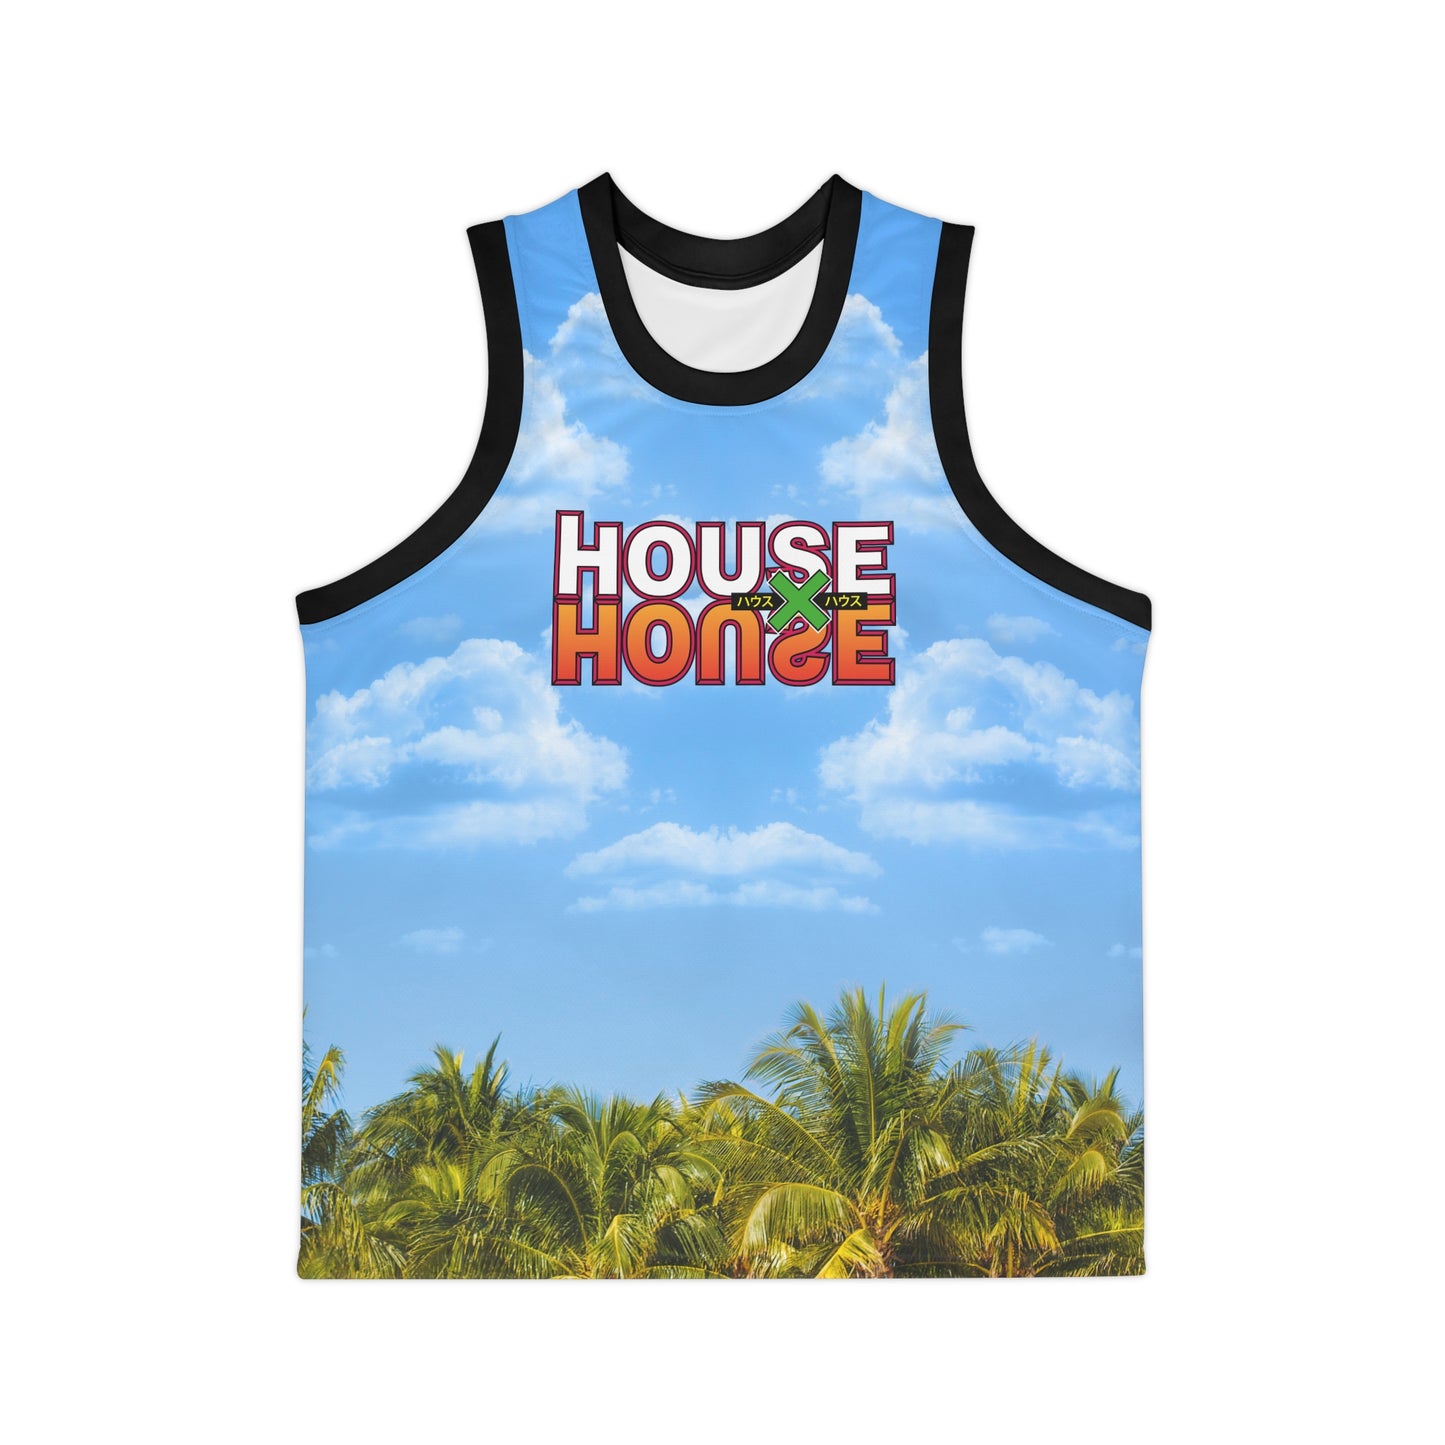 House X House Basketball Jersey